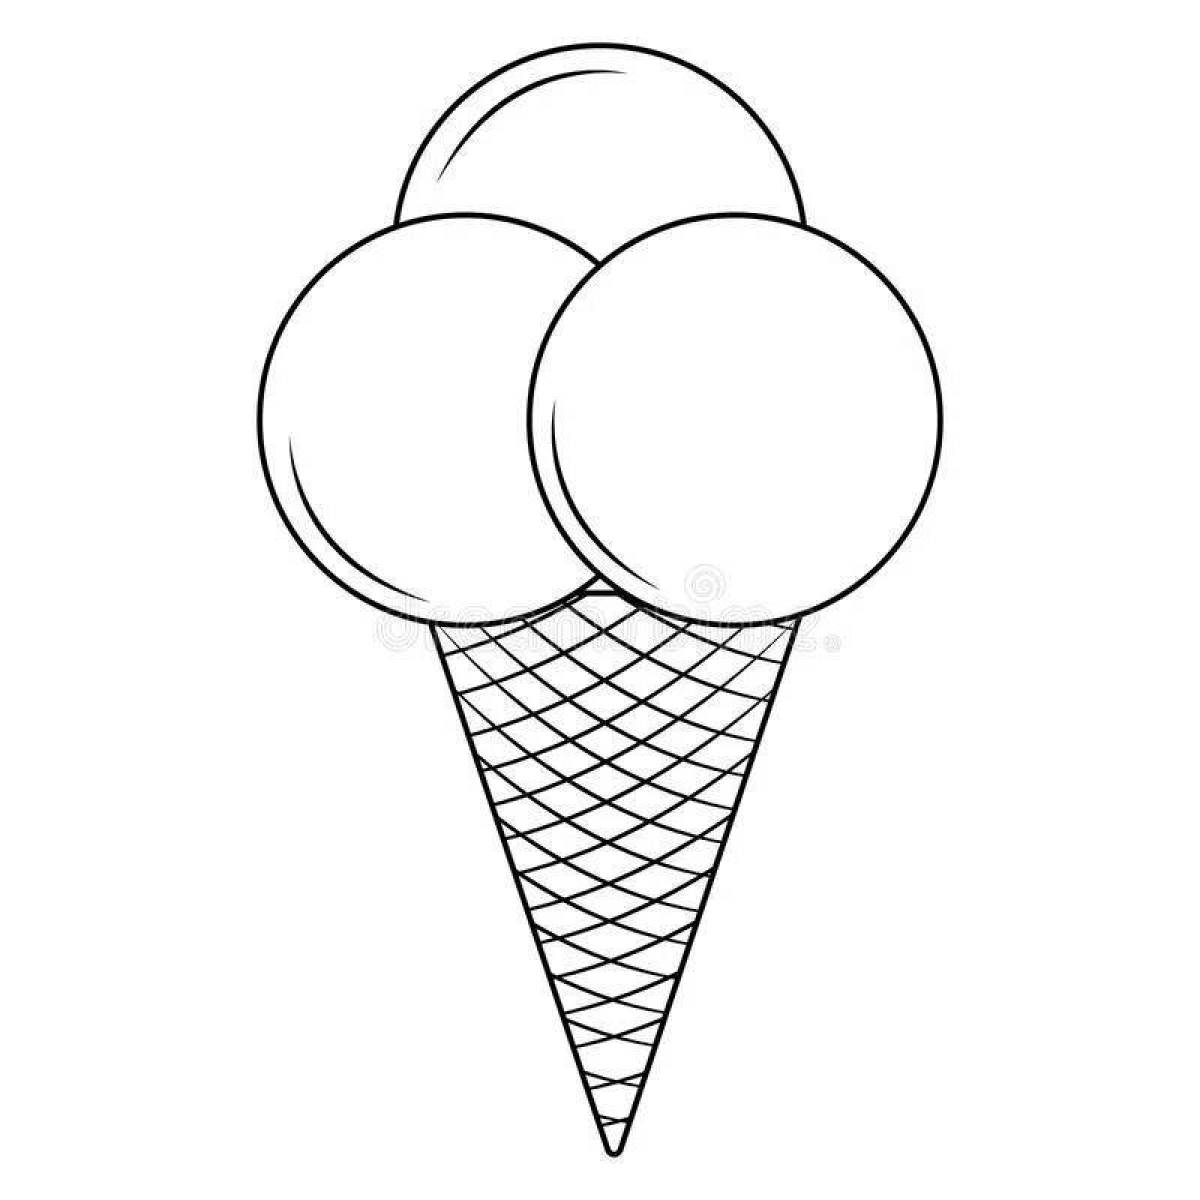 Colourful ice cream cone coloring page